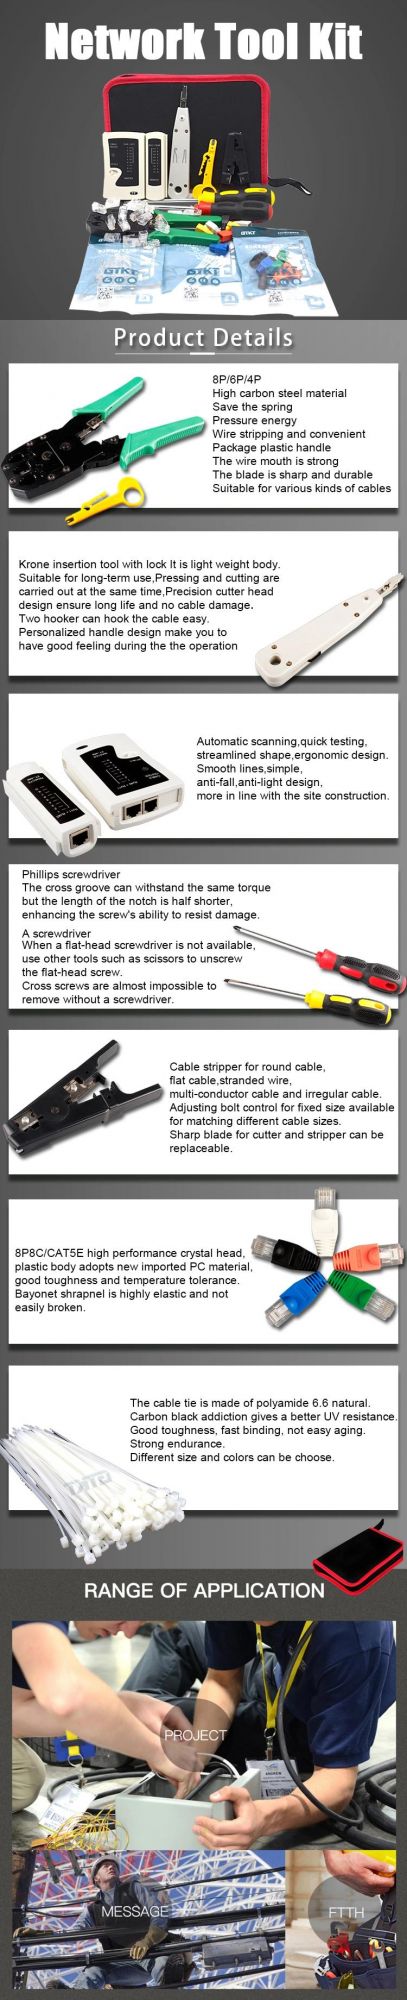 Gcabling LAN Tester Krone Insertion Tool Hand Crimping RJ45 Connector Home Depot Network Tool Kit